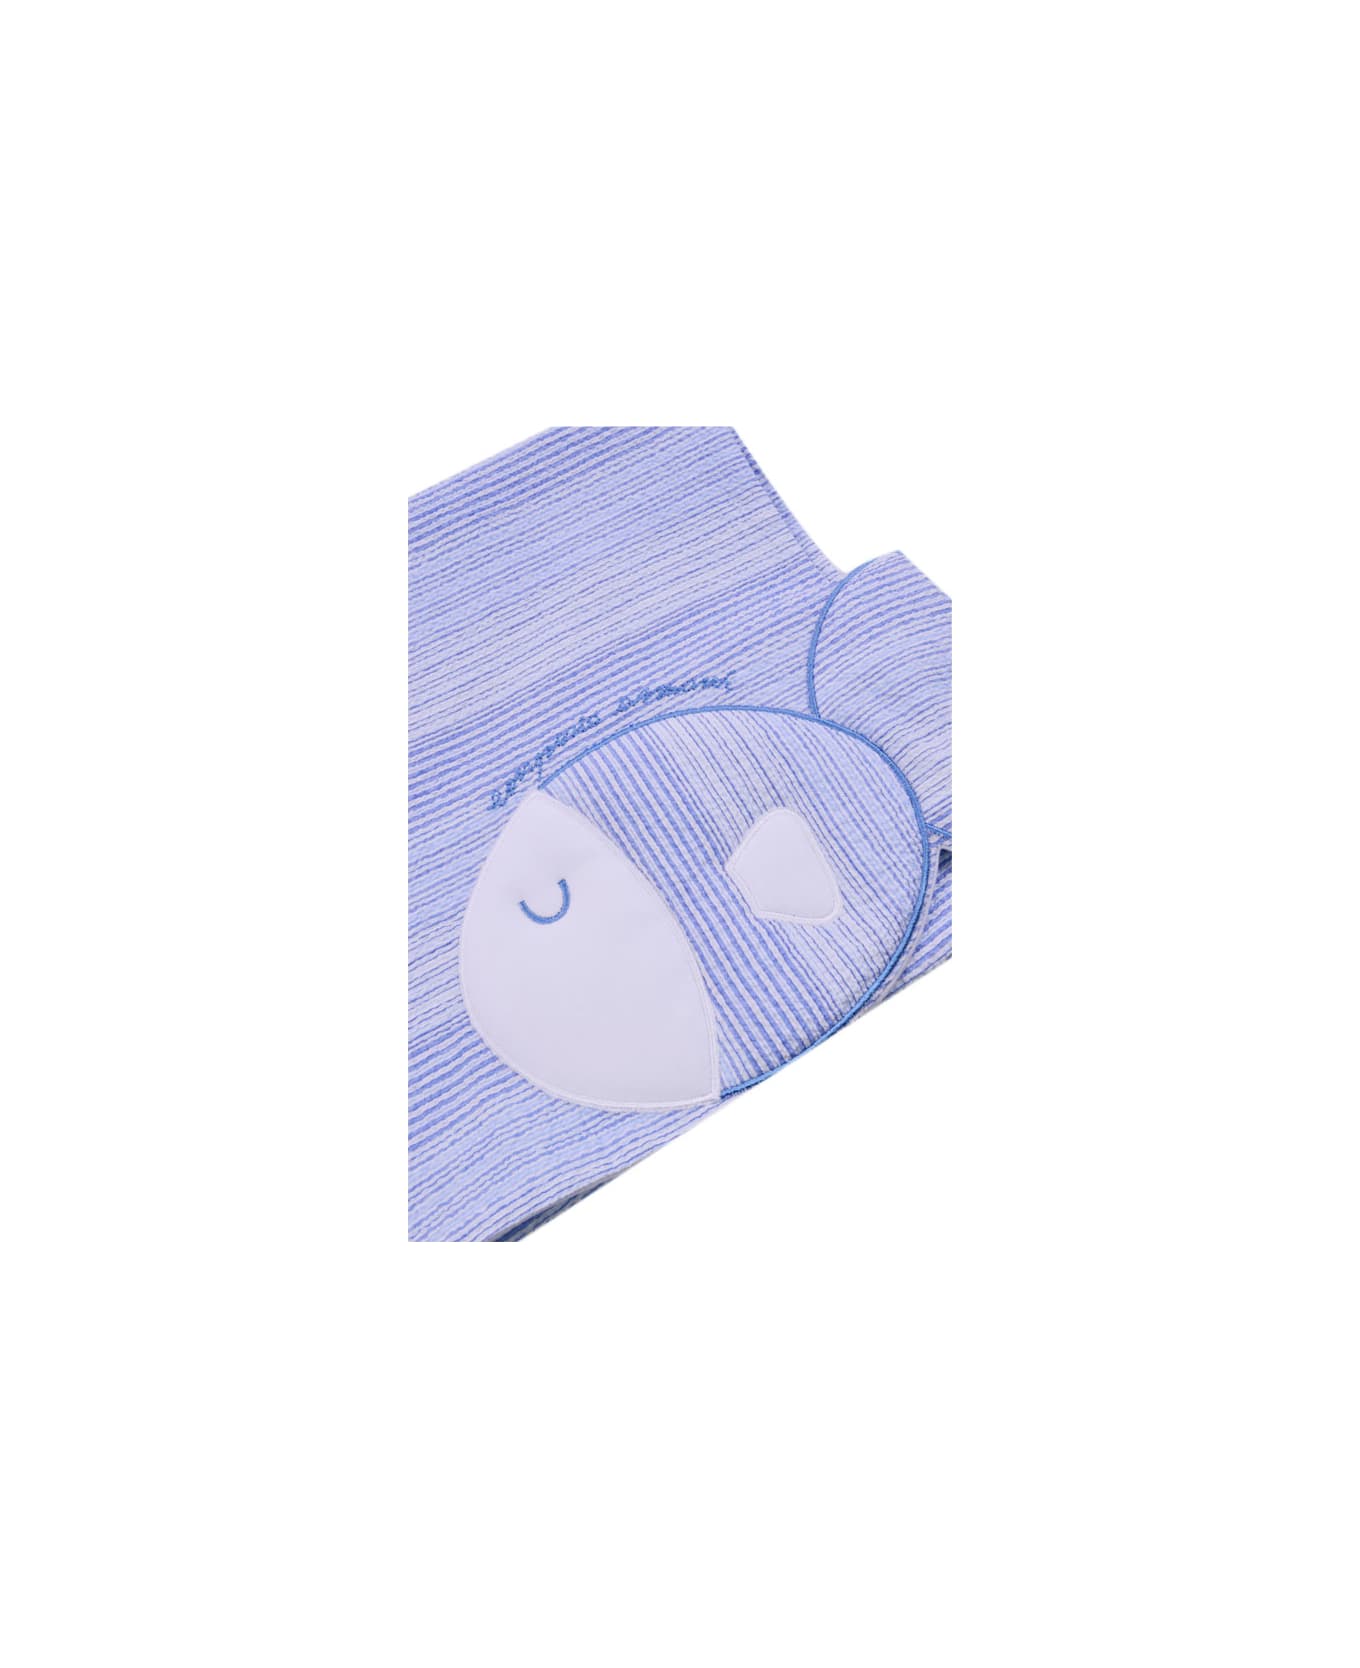 Emporio Armani Striped Cotton Blanket - Light blue アクセサリー＆ギフト